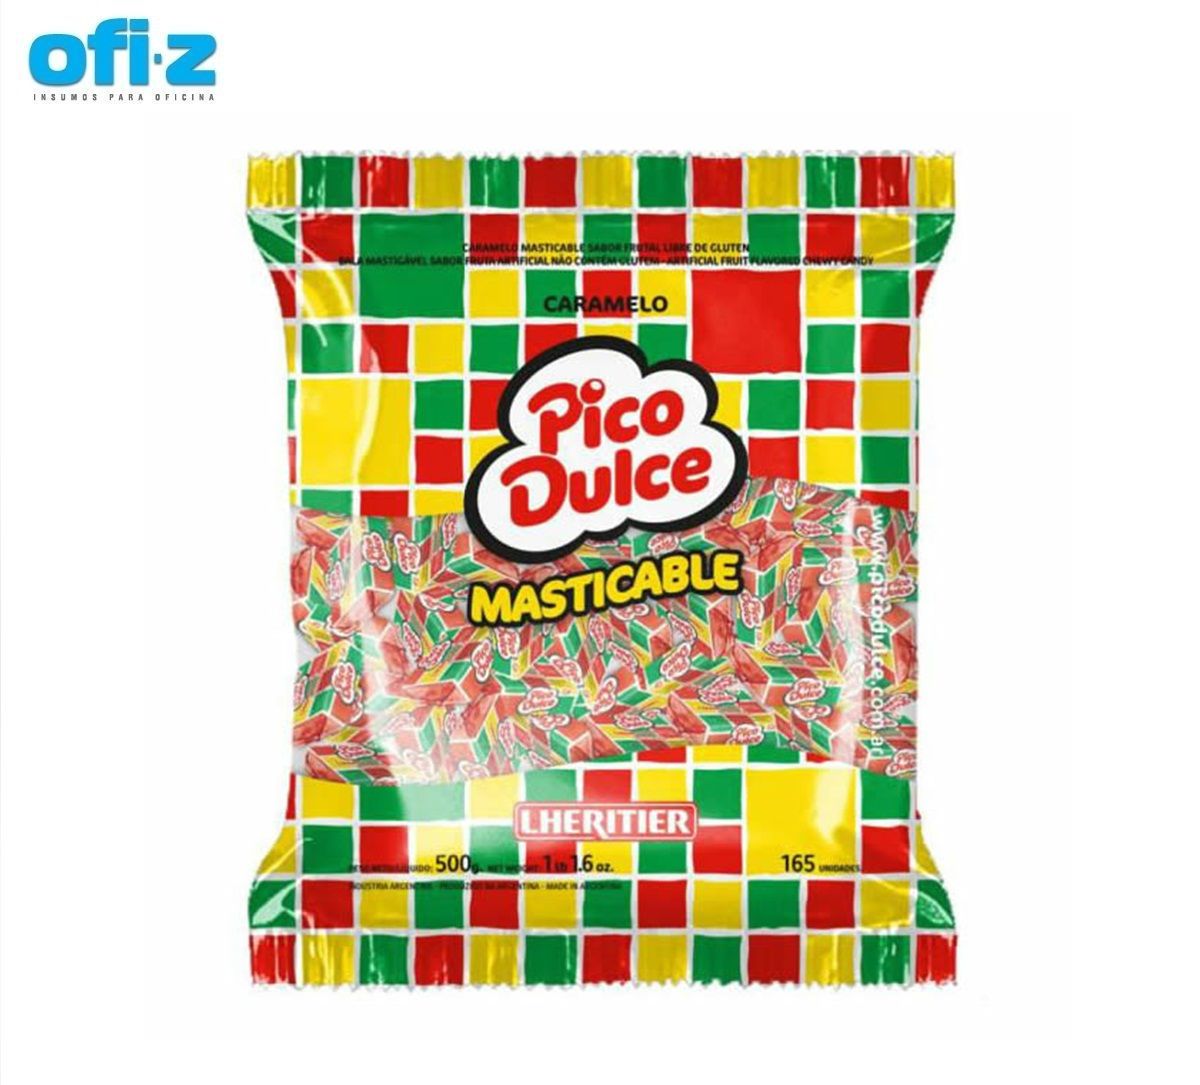 [ELIMINADO] Caramelo Pico dulce frutal 450G